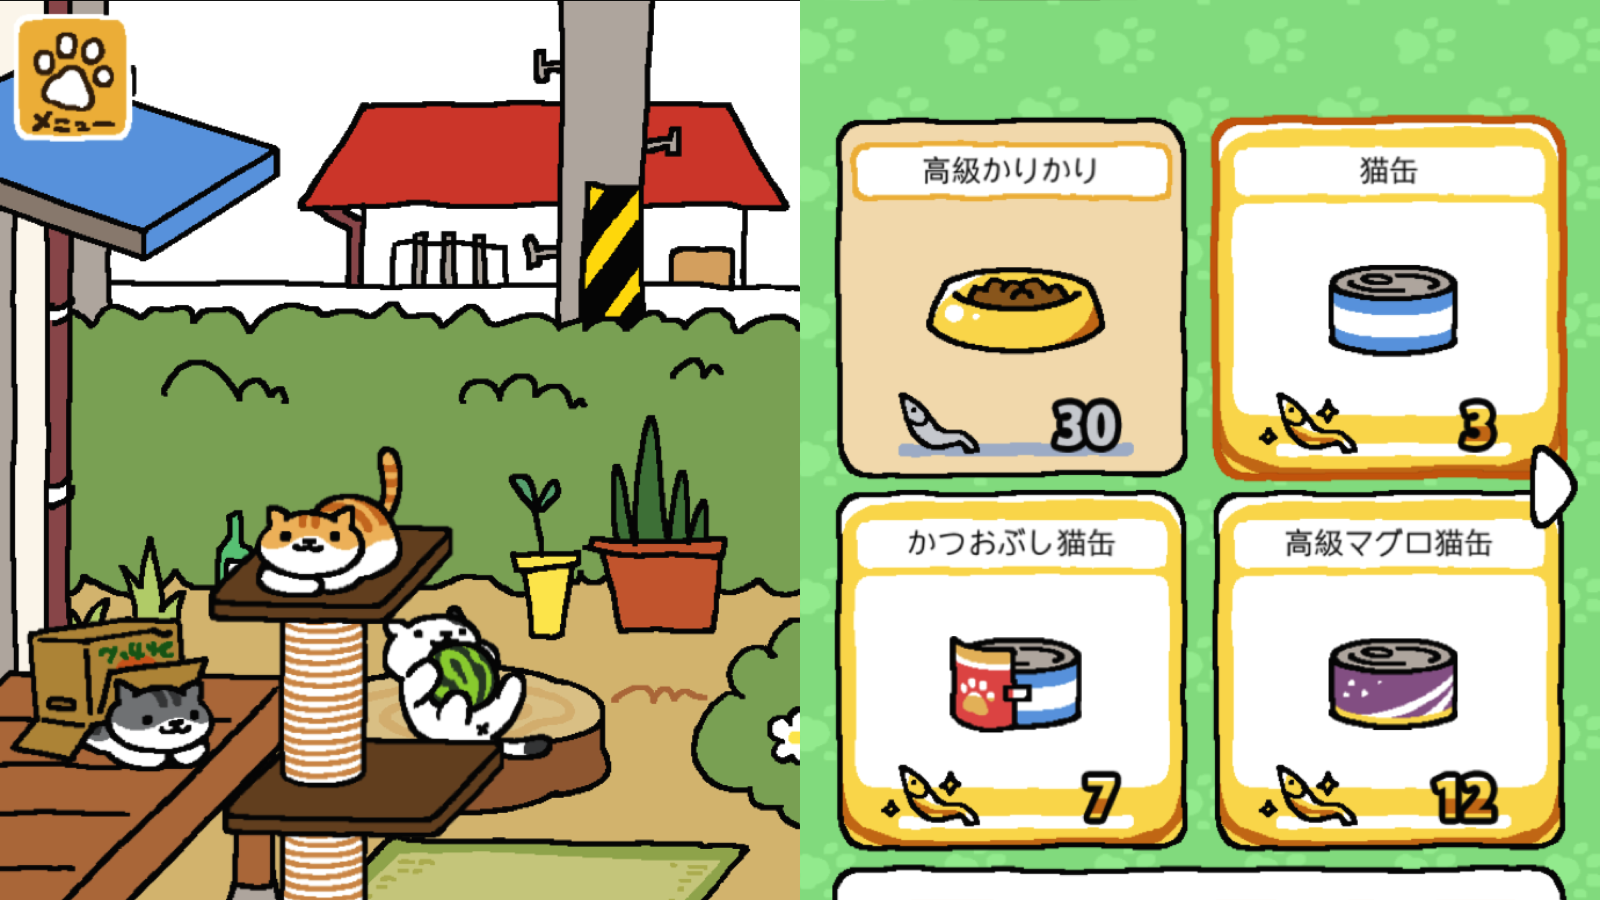 Neko Atsume' is the addicting app where you feed cats